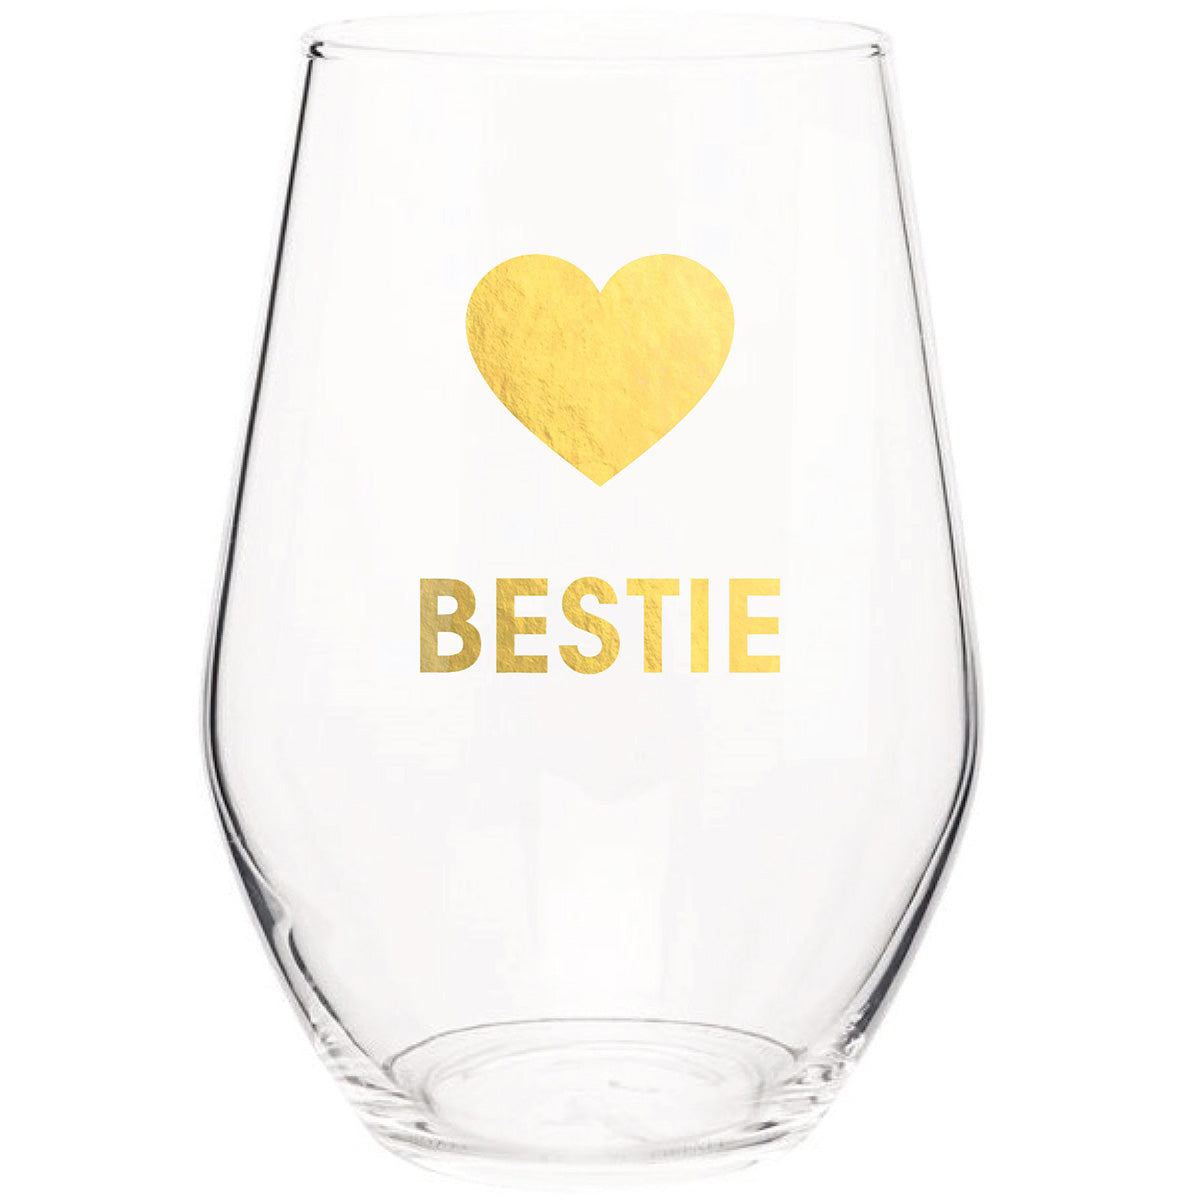 Bestie - Gold Foil Stemless Wine Glass